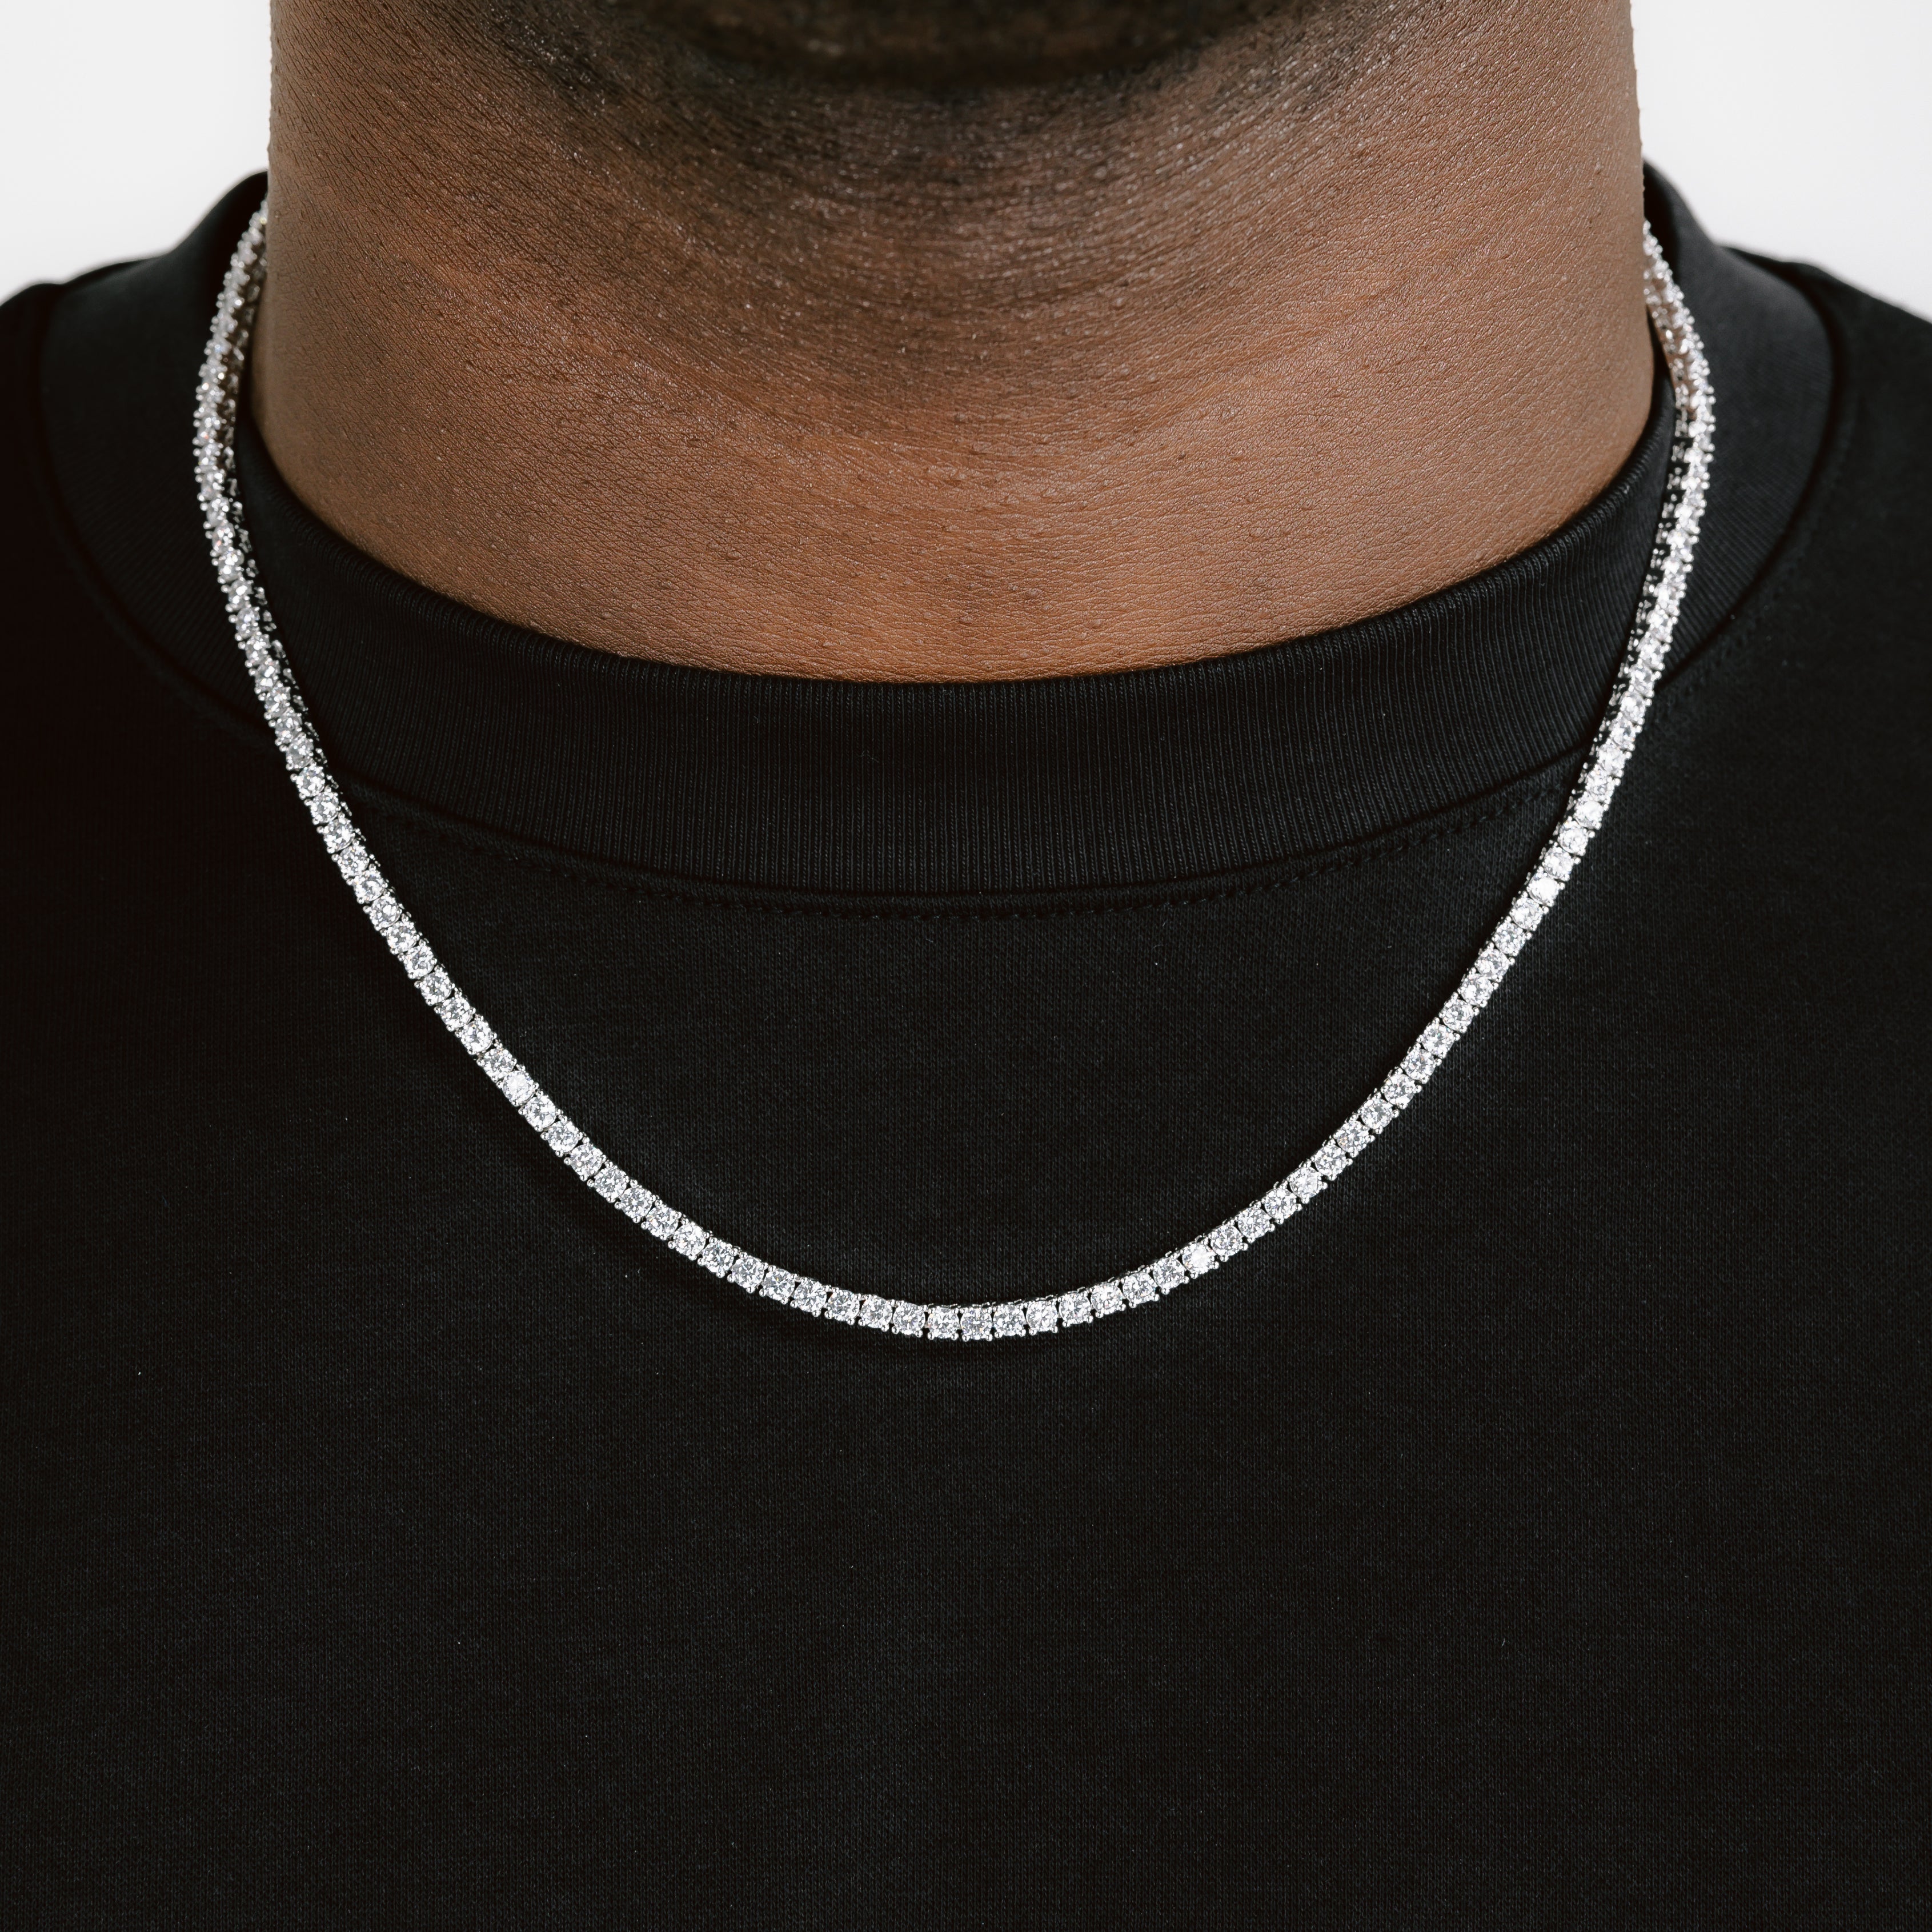 Diamond Tennis Necklace + Bracelet Bundle White Gold - 3mm